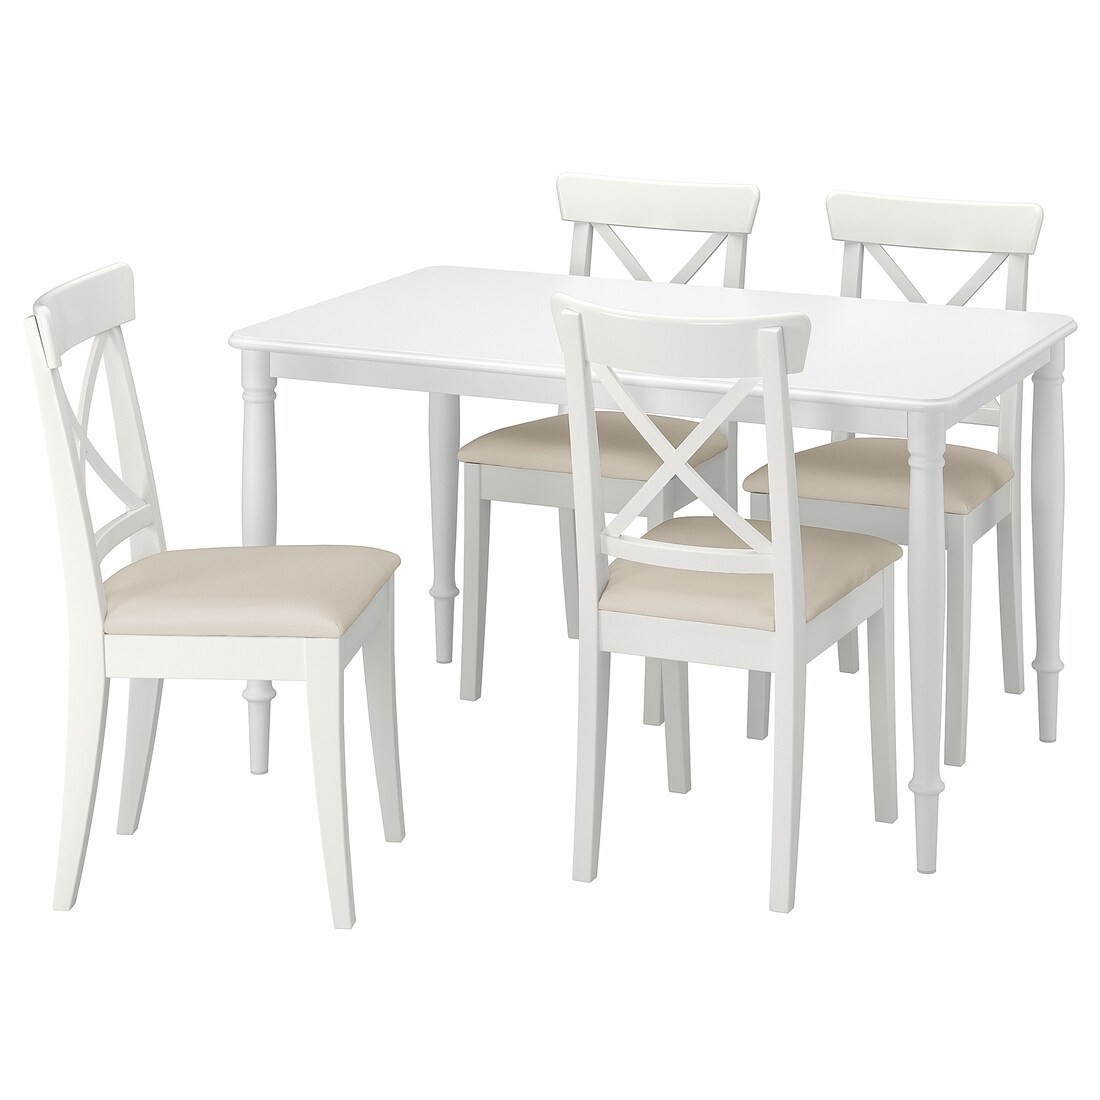 DANDERYD / INGOLF Стол и 4 стула, белый / Hallarp бежевый, 130 см